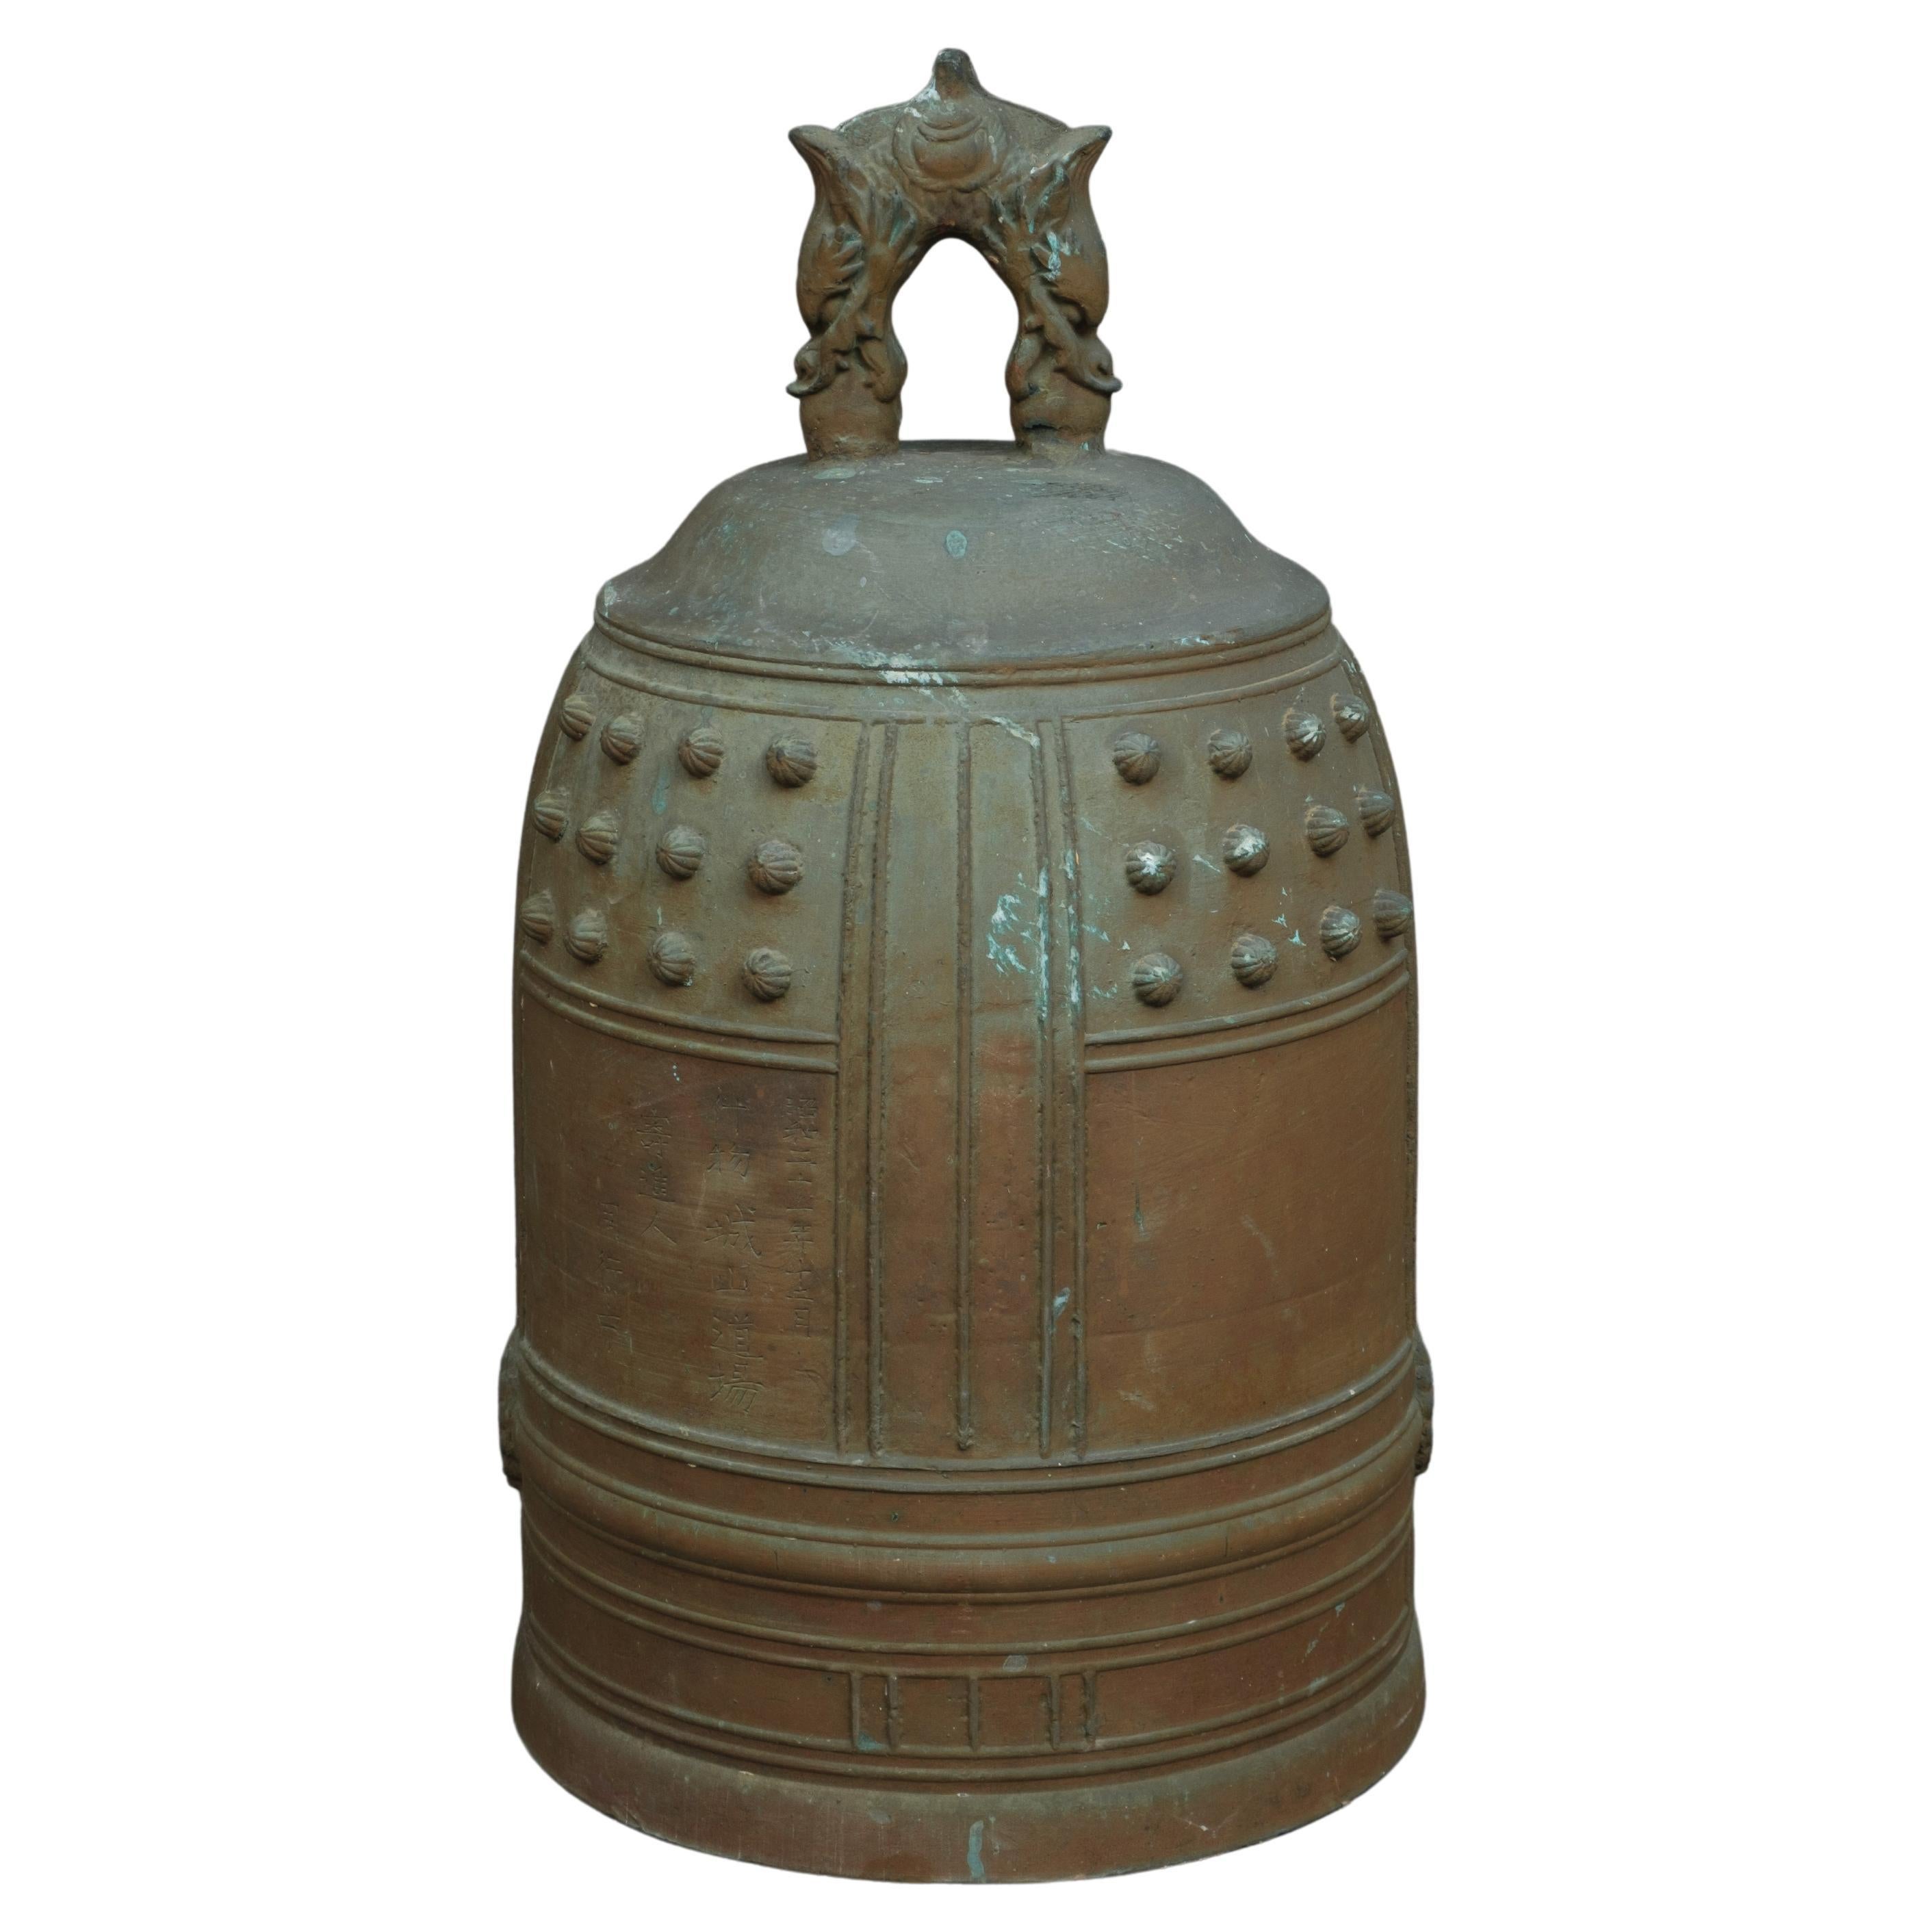 Heavy, Japanese bronze temple bell 梵鐘 (bonshô) of traditional shape